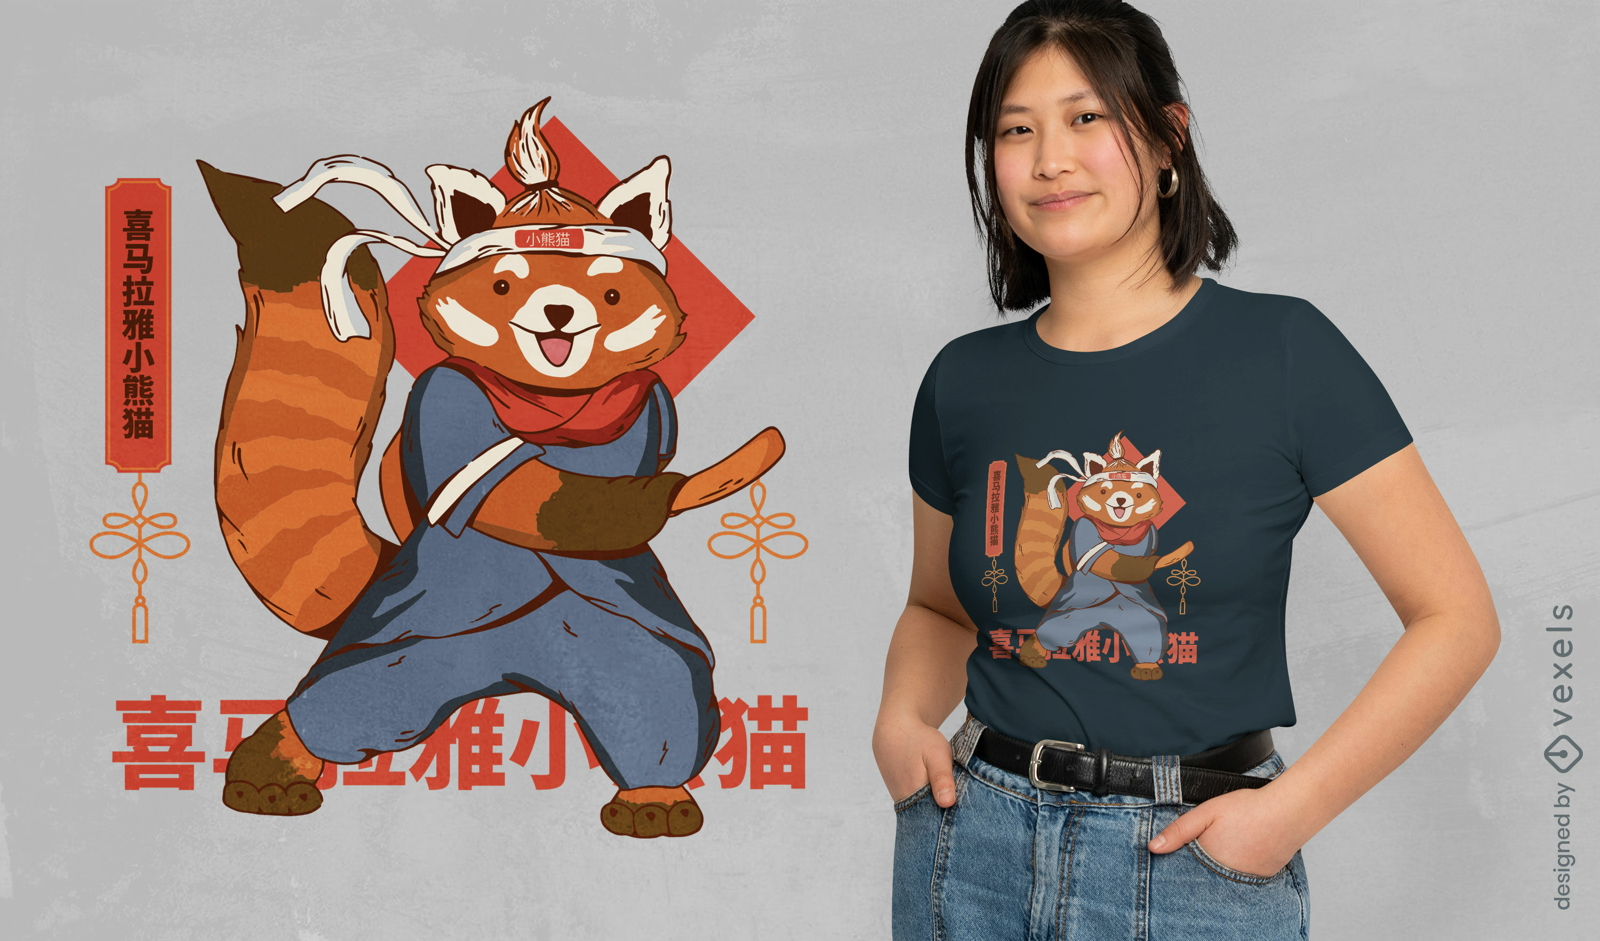 Red panda ninja martial arts t-shirt design